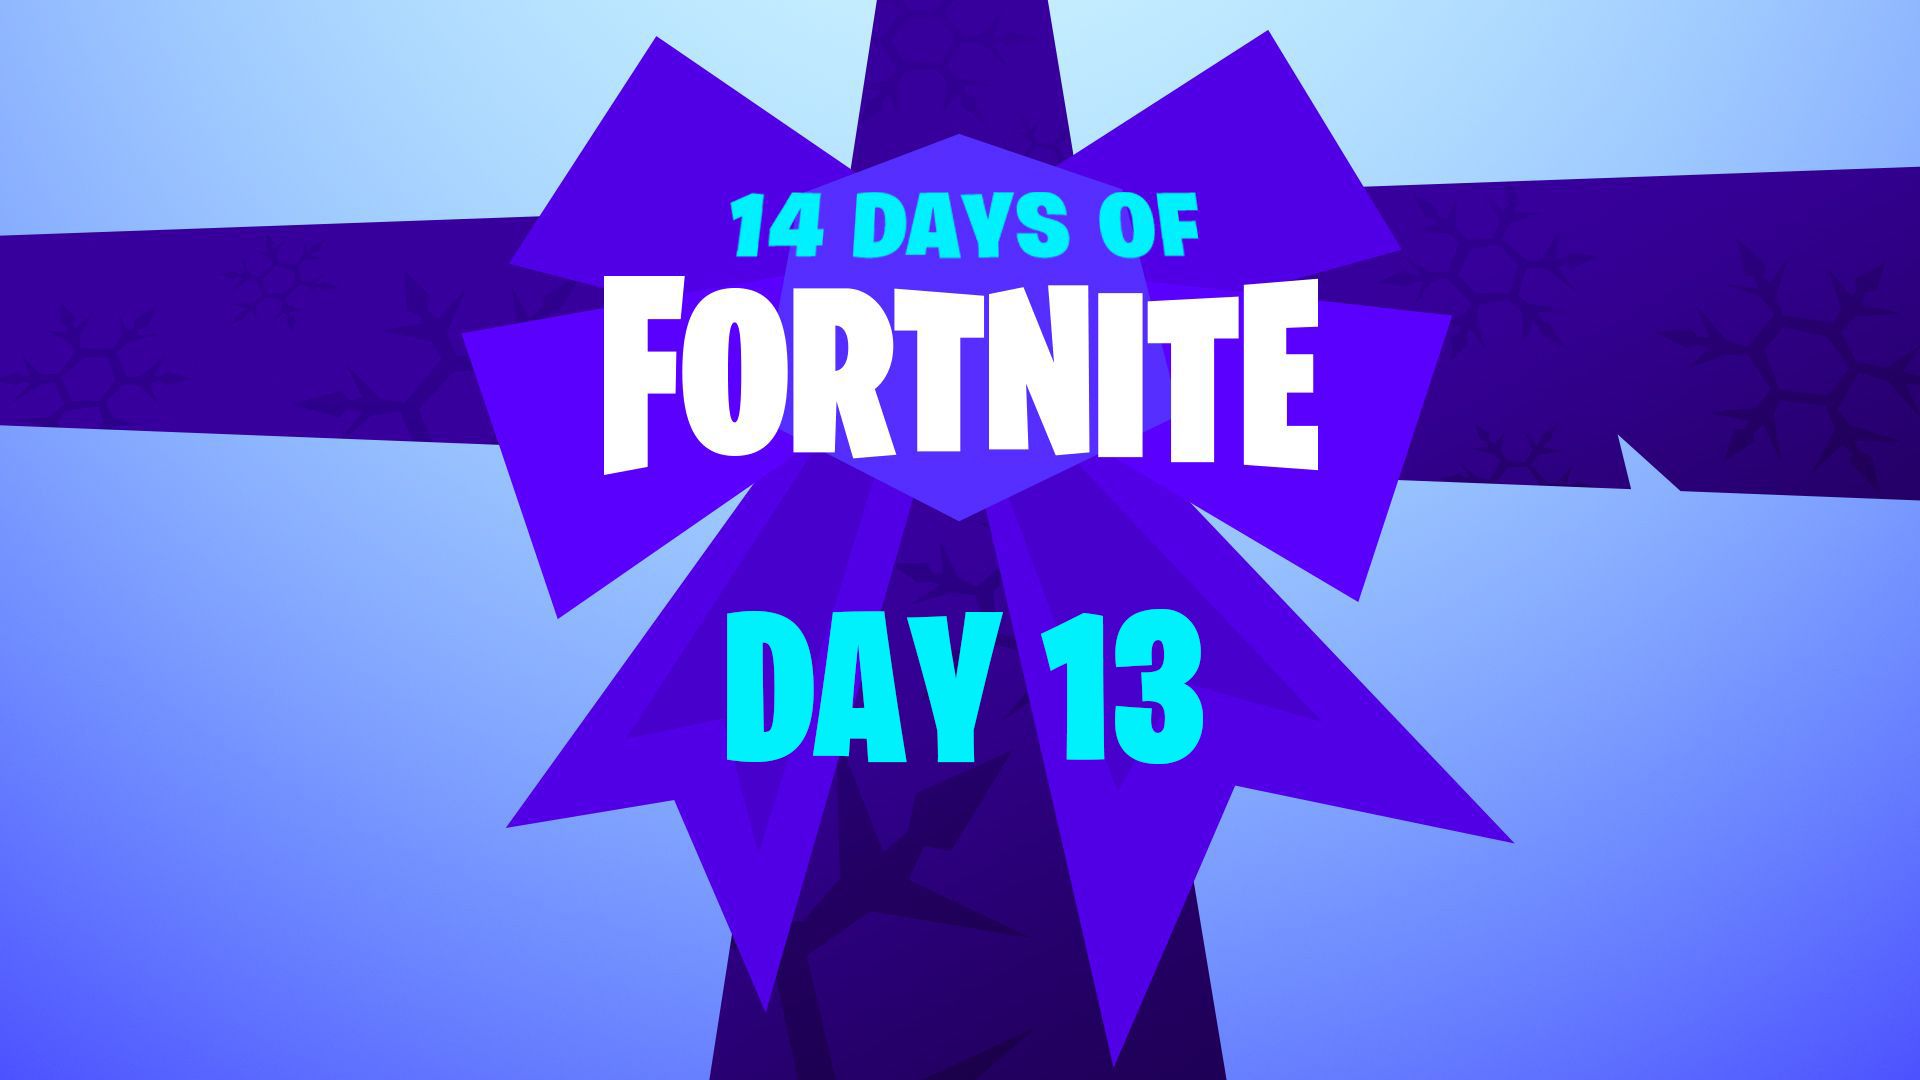 14 Days of Fortnite - Day 13 challenge & reward